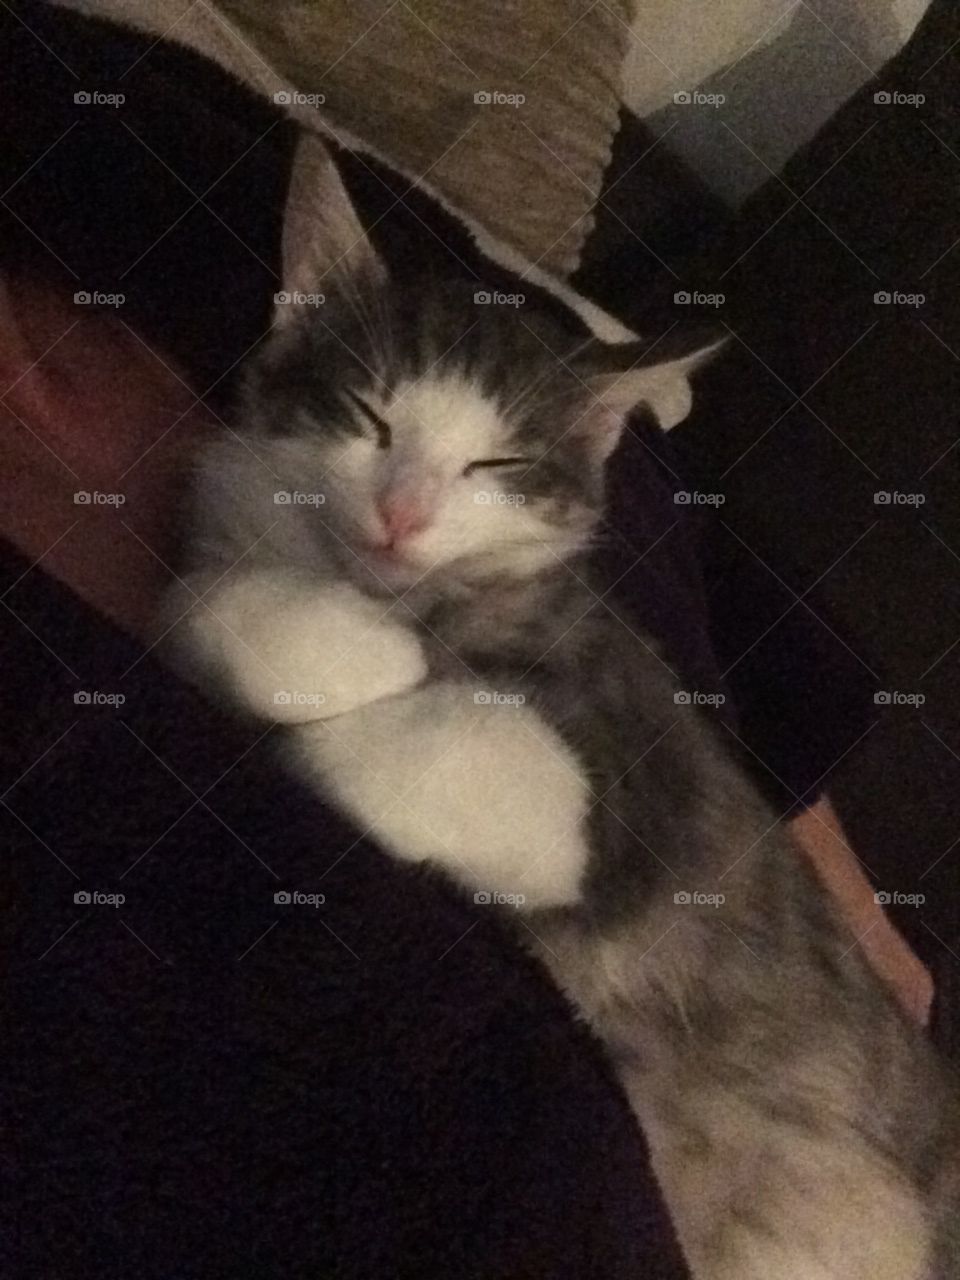 Kitten asleep folding his arms 